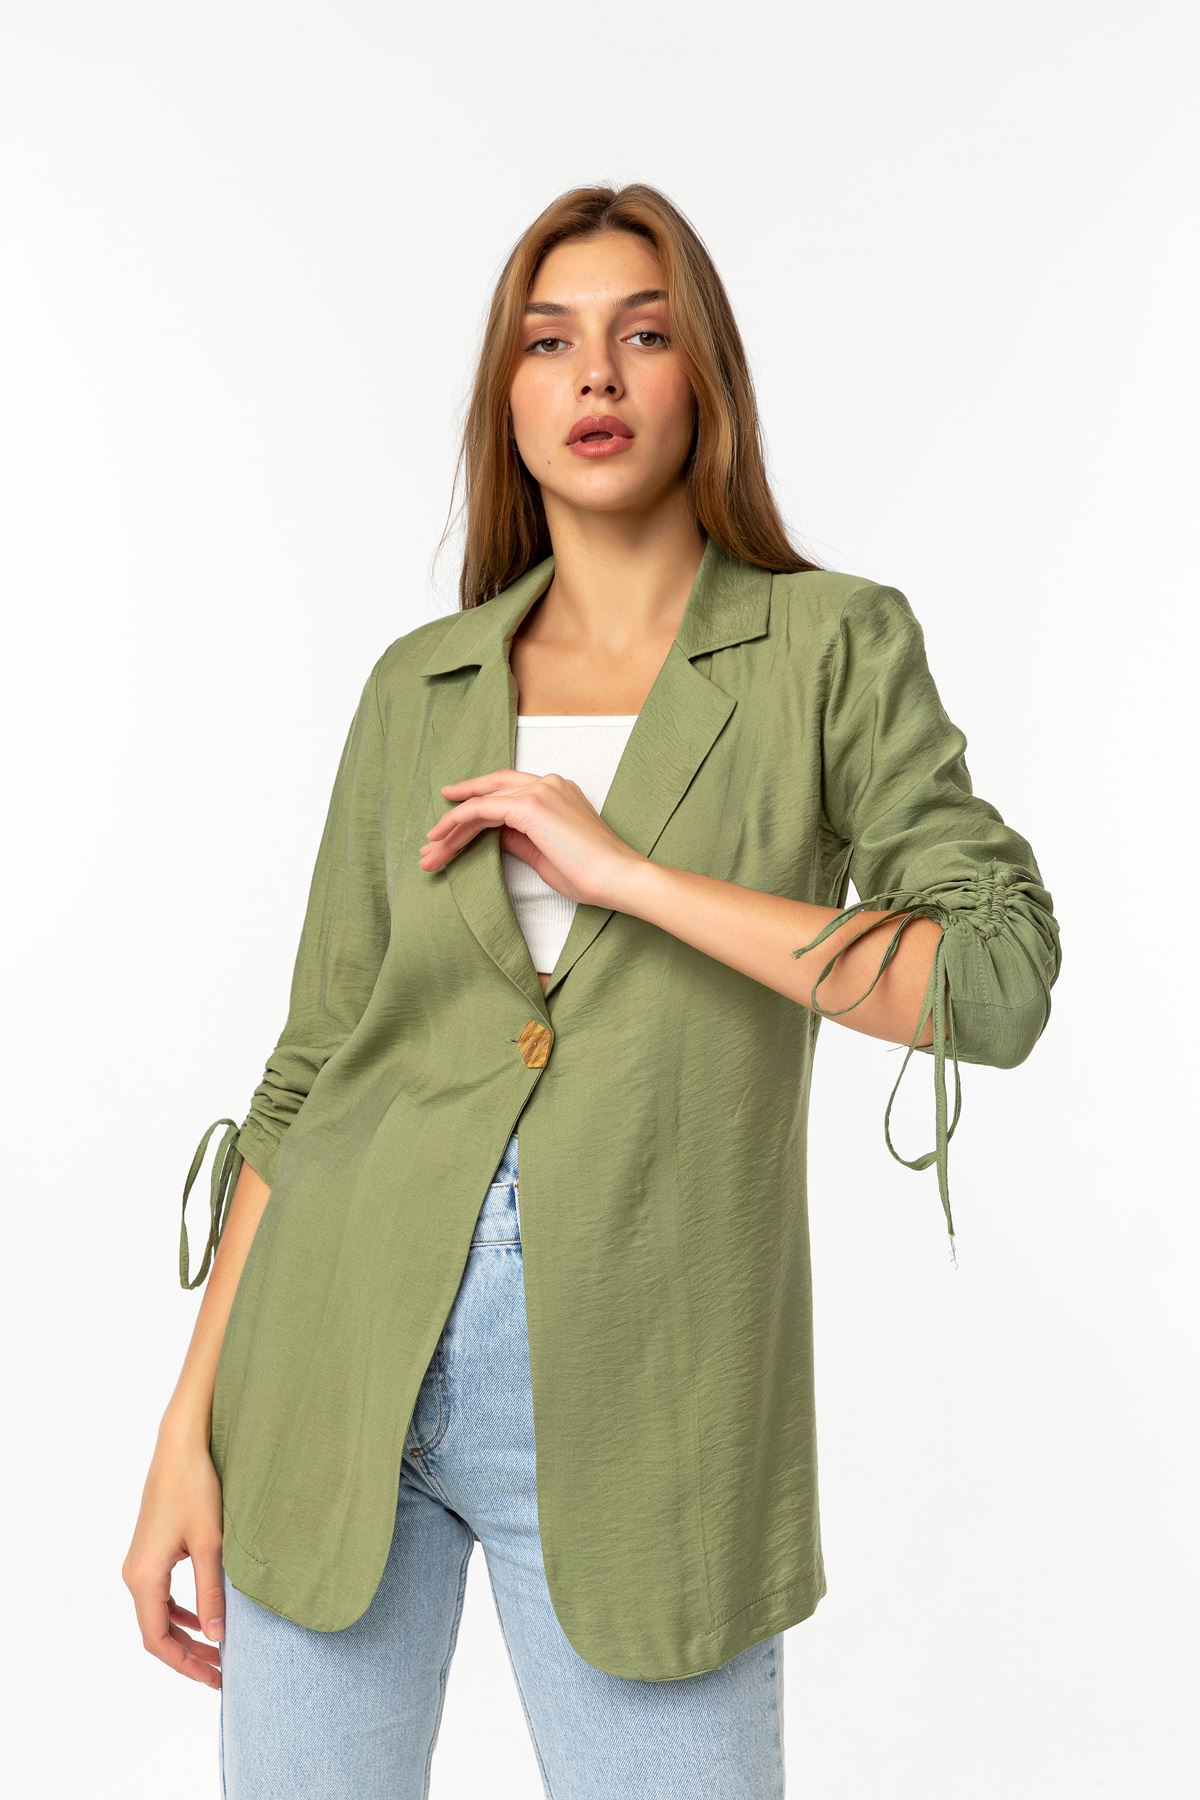 Aerobin Fabric Revere Collar Hip Height Comfy Women Jacket - Khaki 